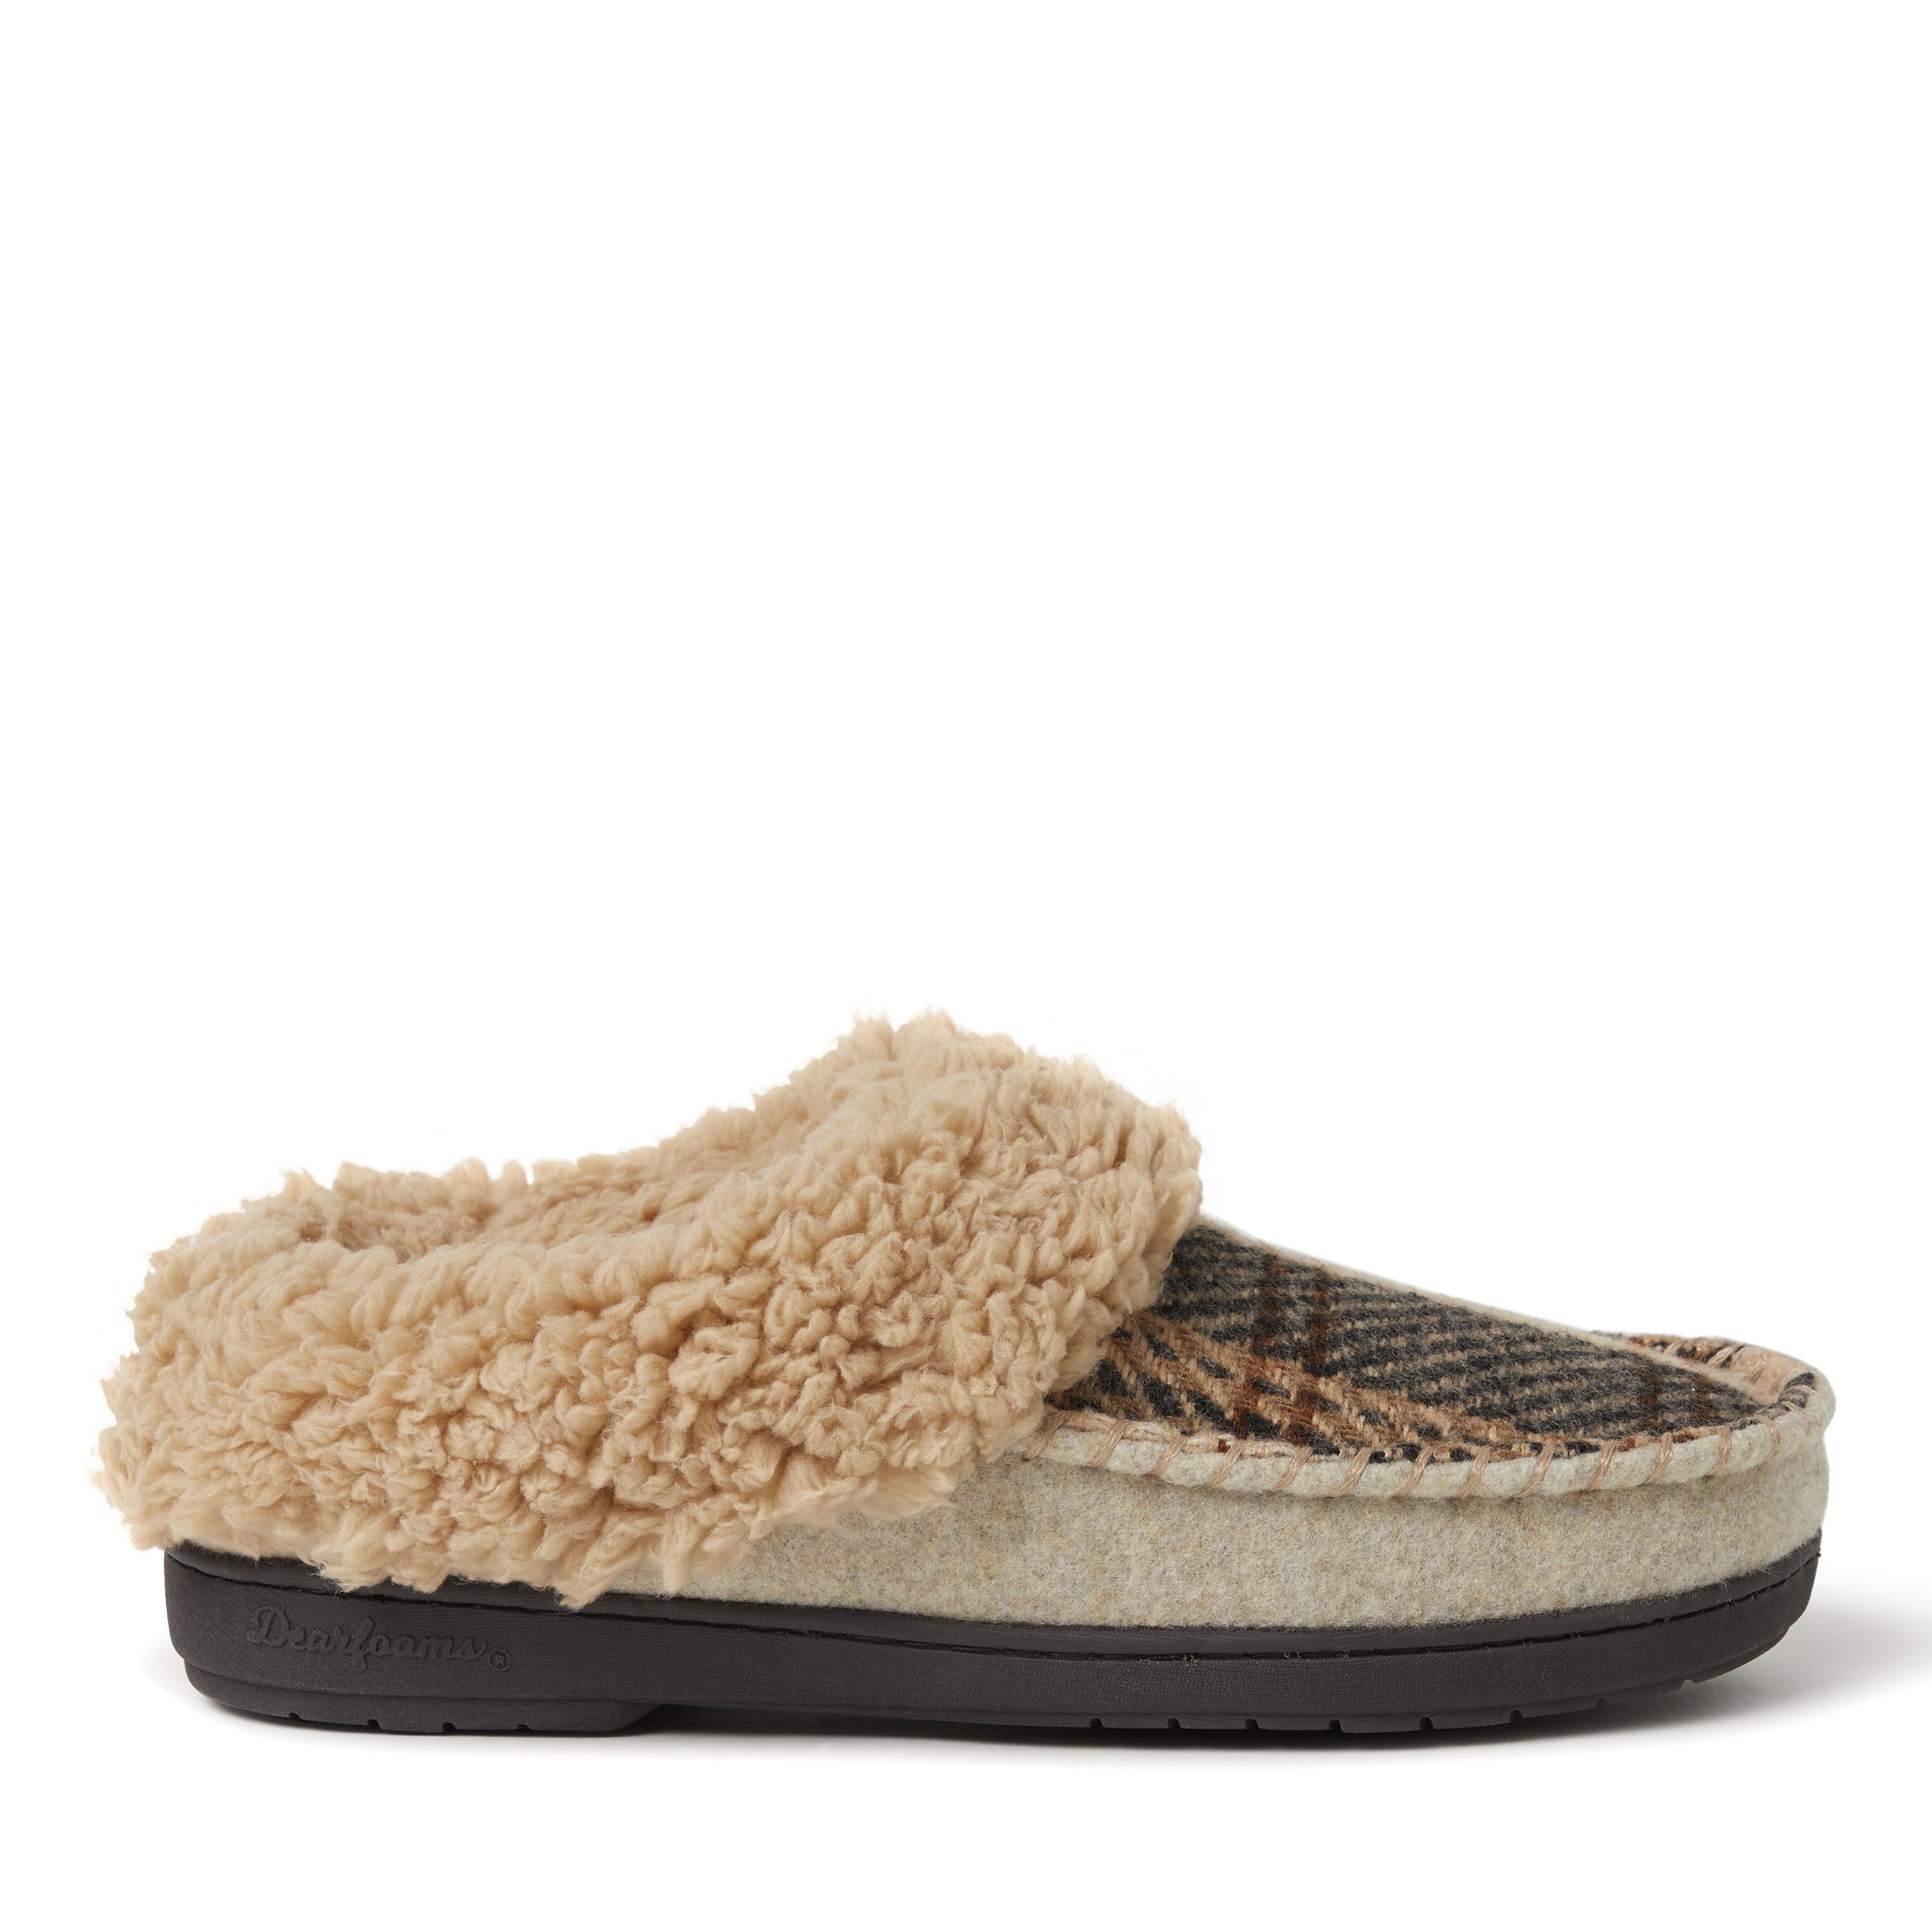 Dearfoams - Dearfoams Plaid & Wool Inspired Foldover Slippers with ...